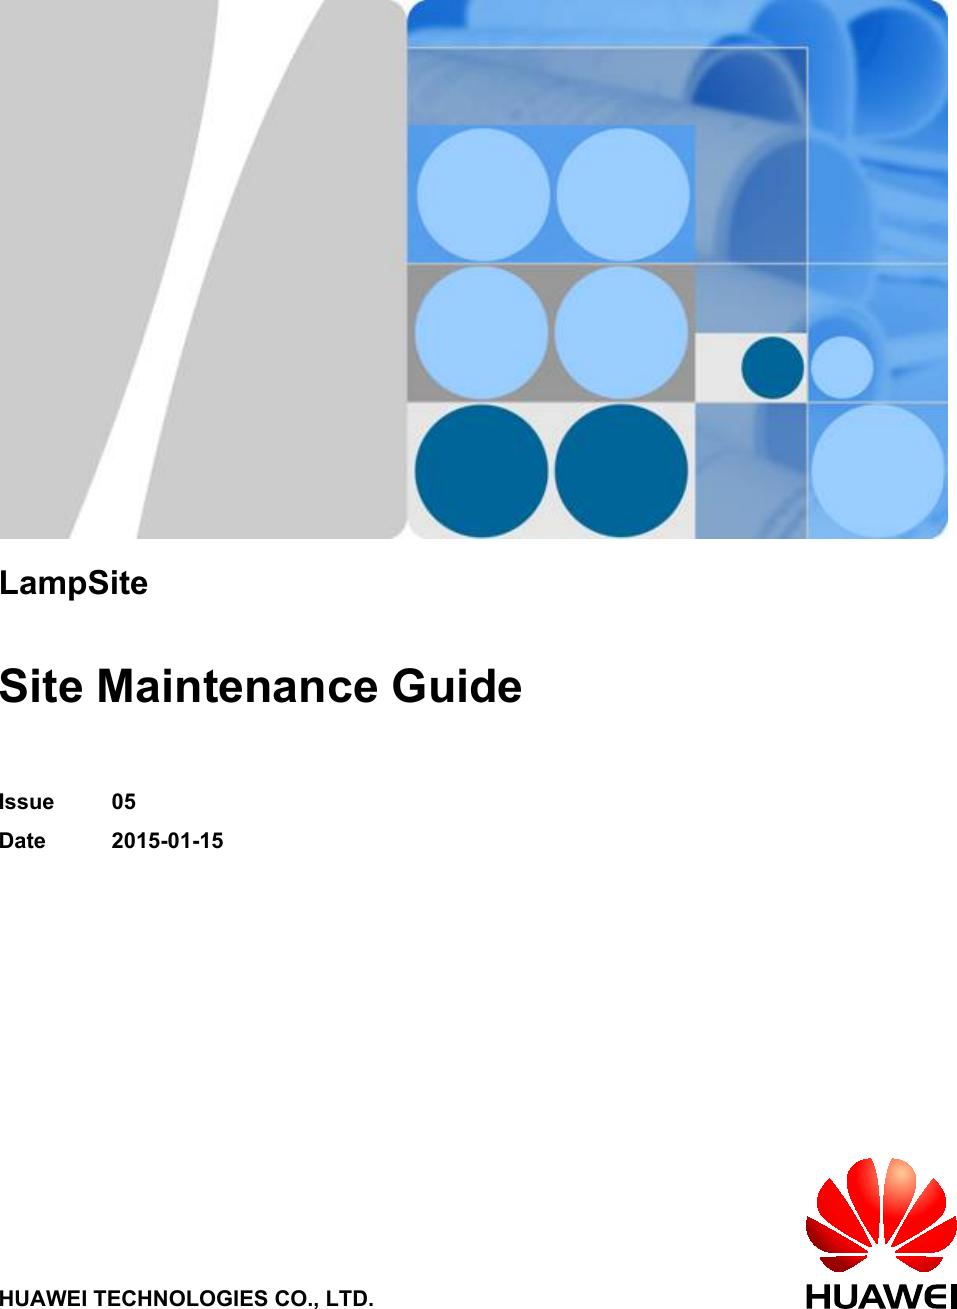 LampSiteSite Maintenance GuideIssue 05Date 2015-01-15HUAWEI TECHNOLOGIES CO., LTD.